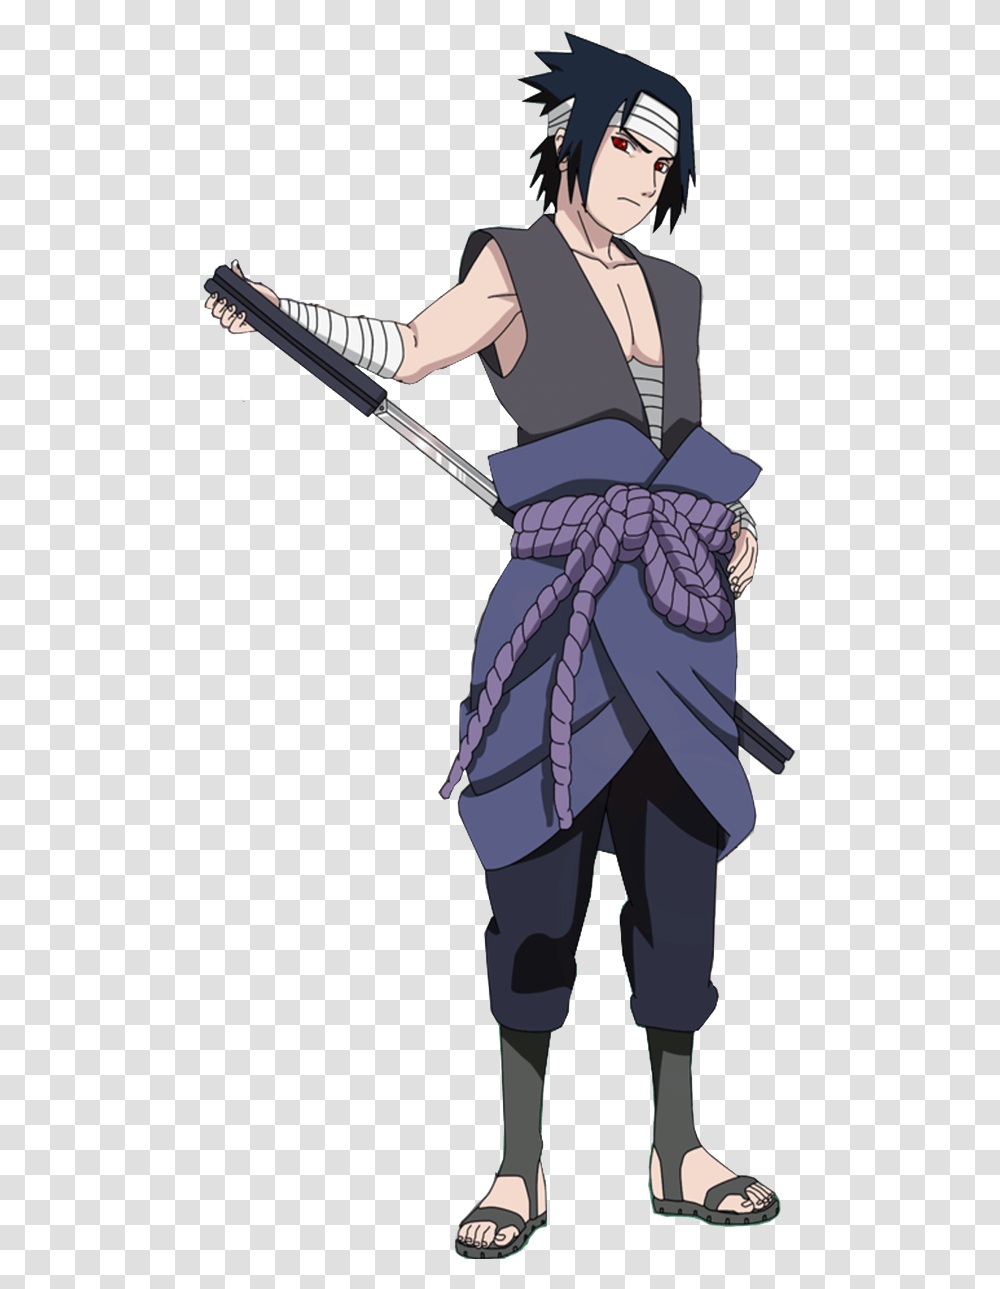 Sasuke Uchiha Full Body Sasuke Vs Itachi Outfit, Ninja, Person, Human, Costume Transparent Png